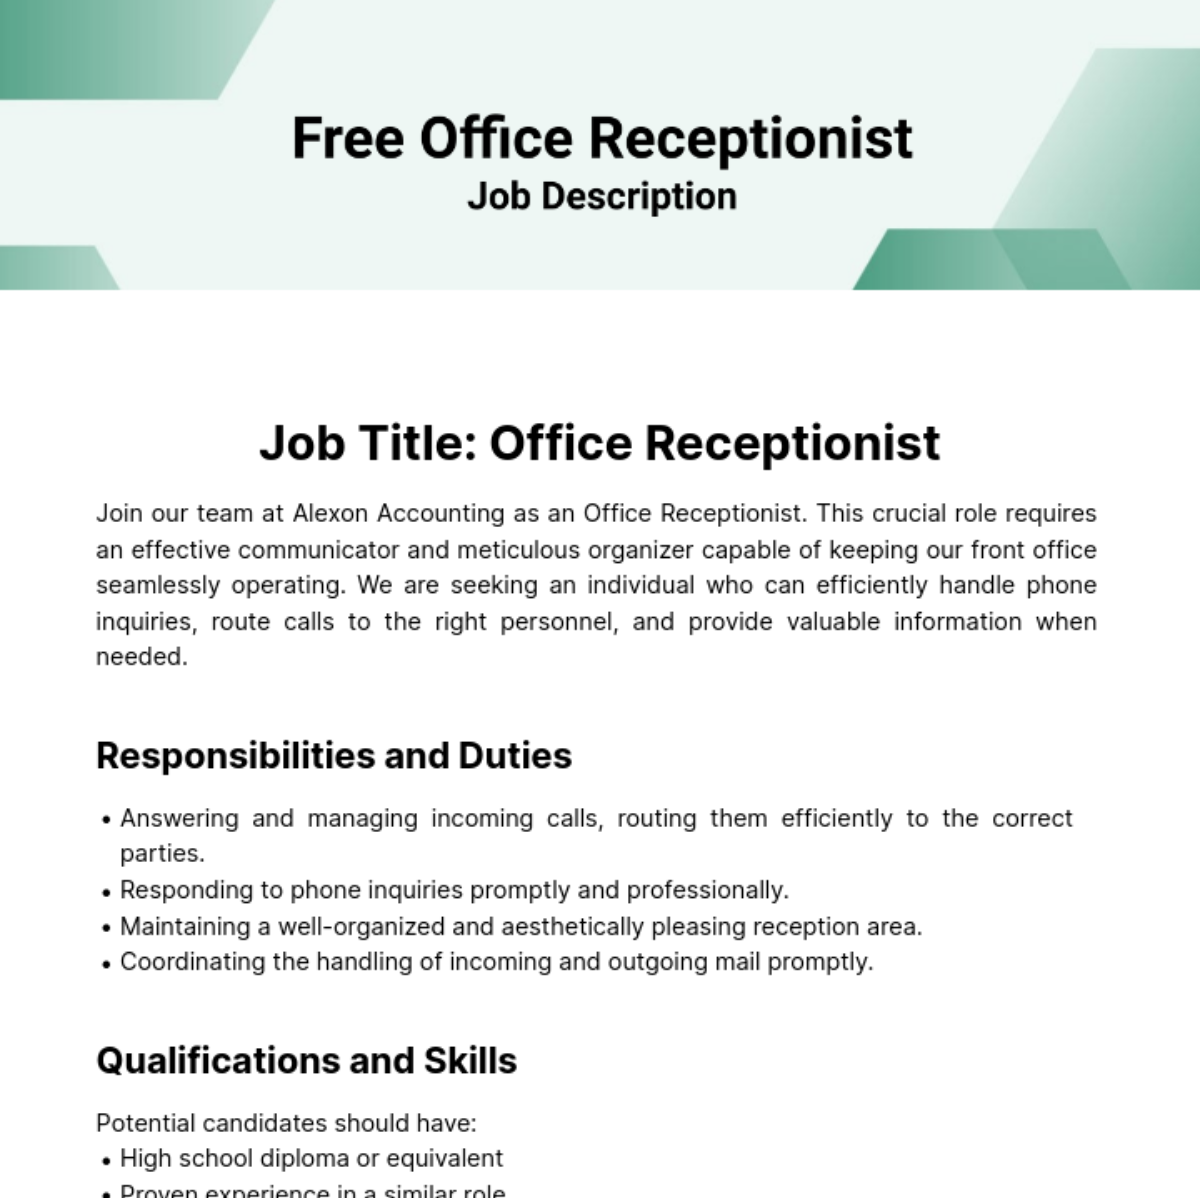 Free Office Receptionist Job Description Template